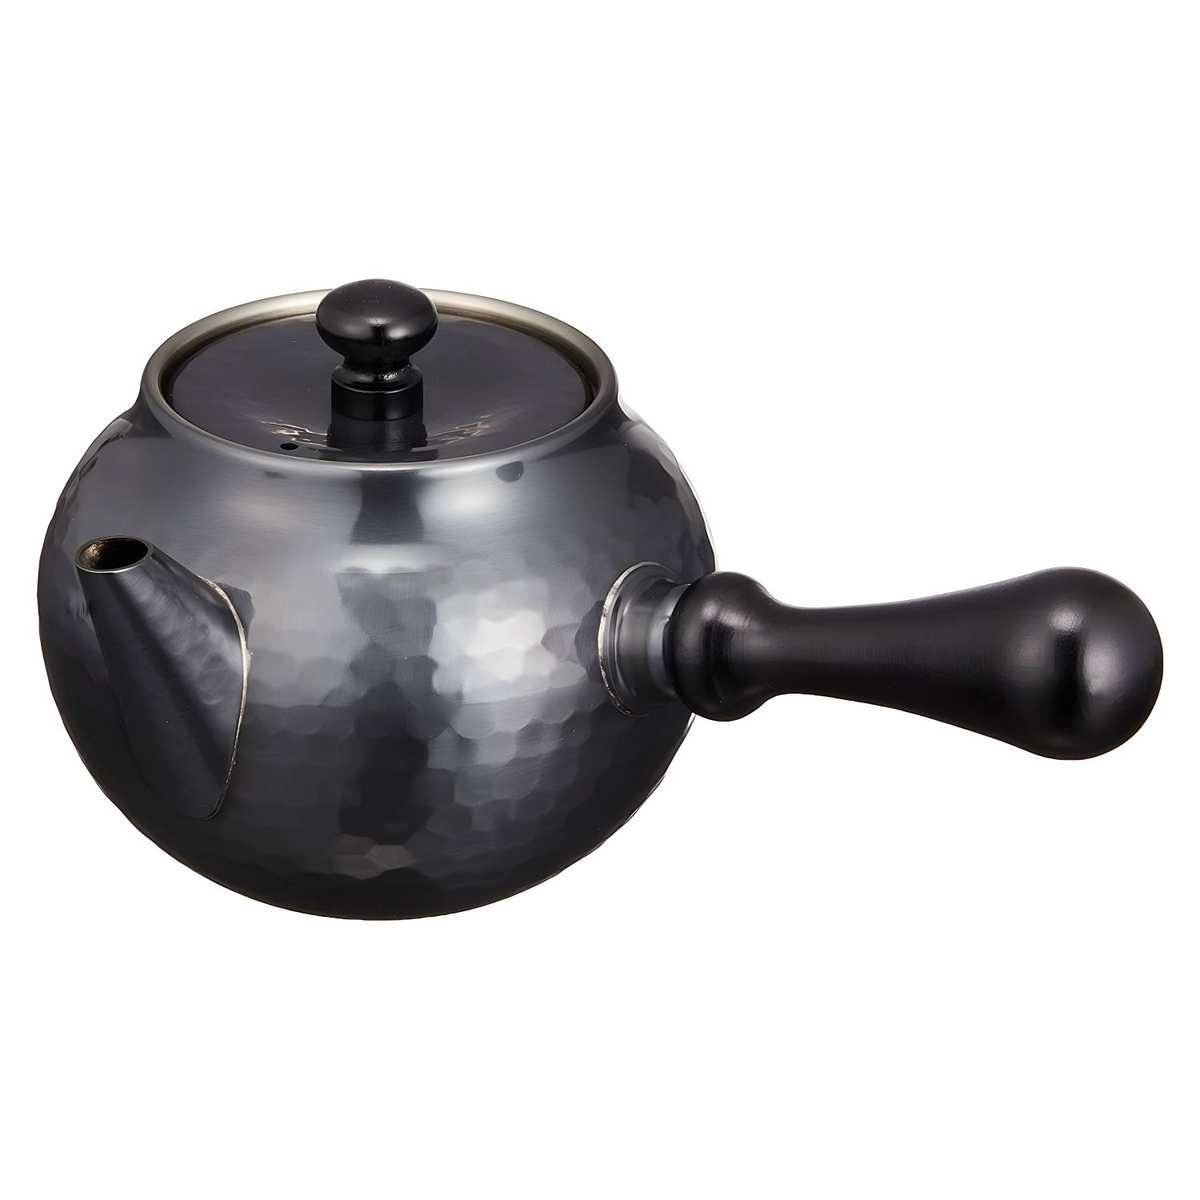 Shinkoukinzoku Copper Kyusu Teapot with Tea Strainer